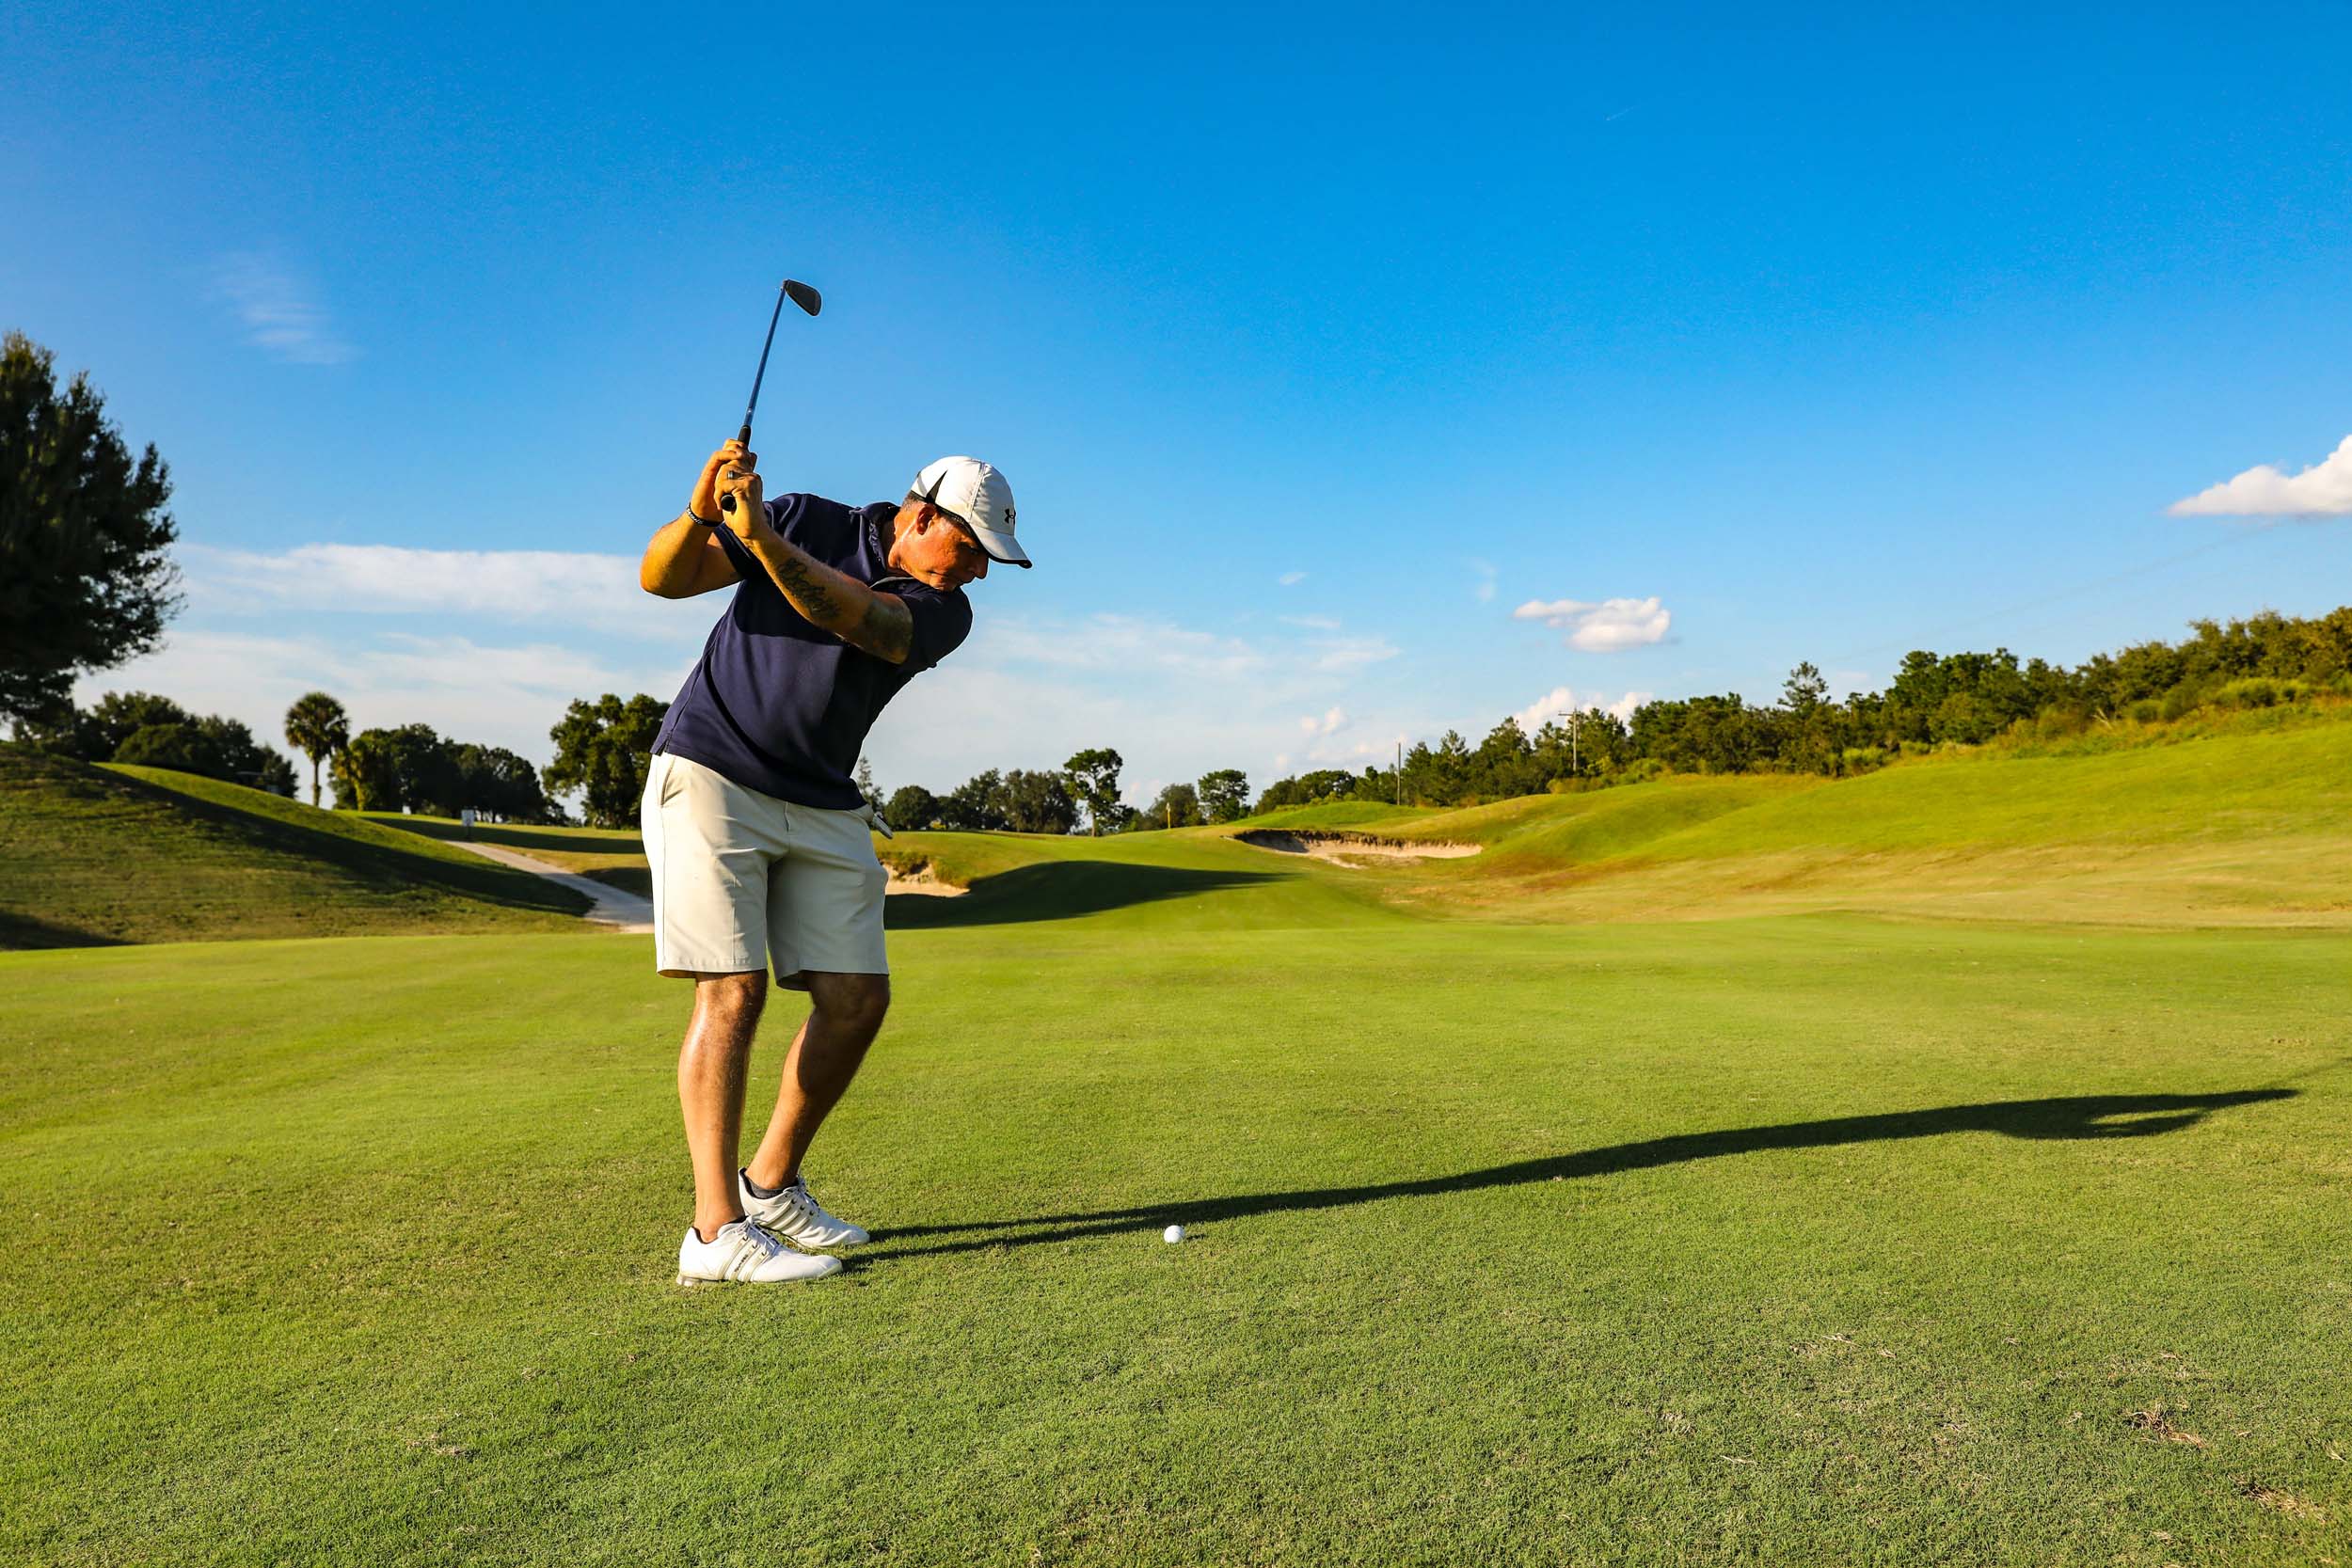 Man swinging golf club on golf course with blue sky